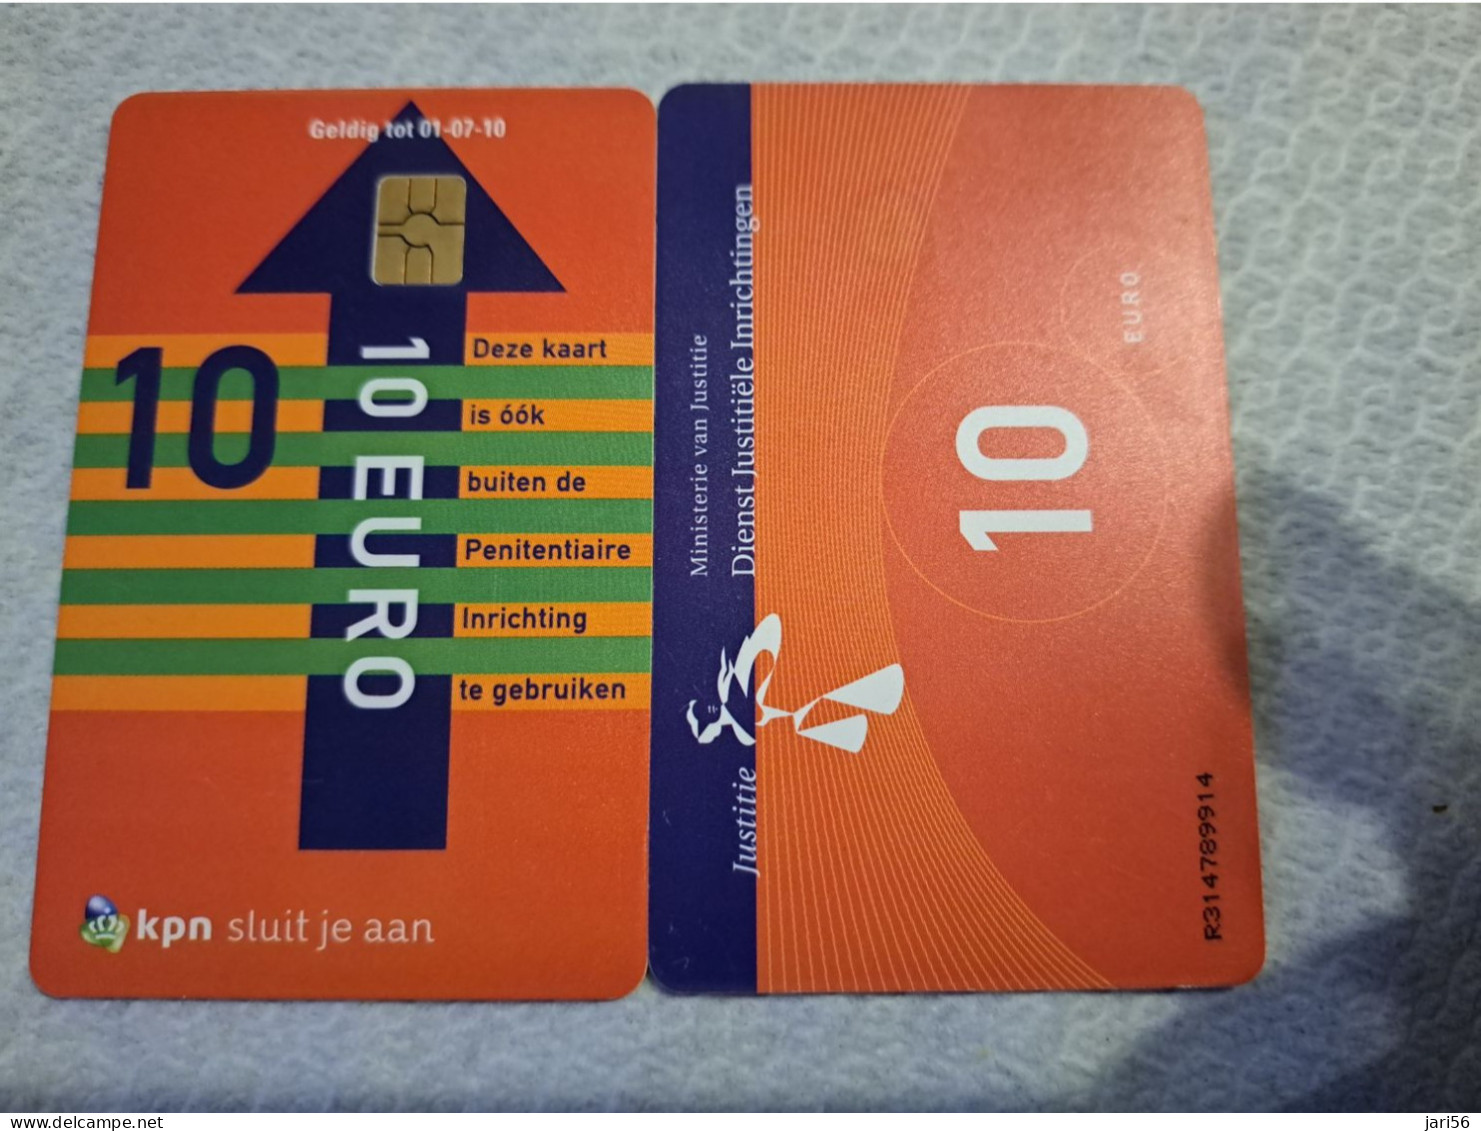 NETHERLANDS   € 10,-   / USED  / DATE  01-07-10  JUSTITIE/PRISON CARD  CHIP CARD/ USED   ** 16163** - [3] Tarjetas Móvil, Prepagadas Y Recargos